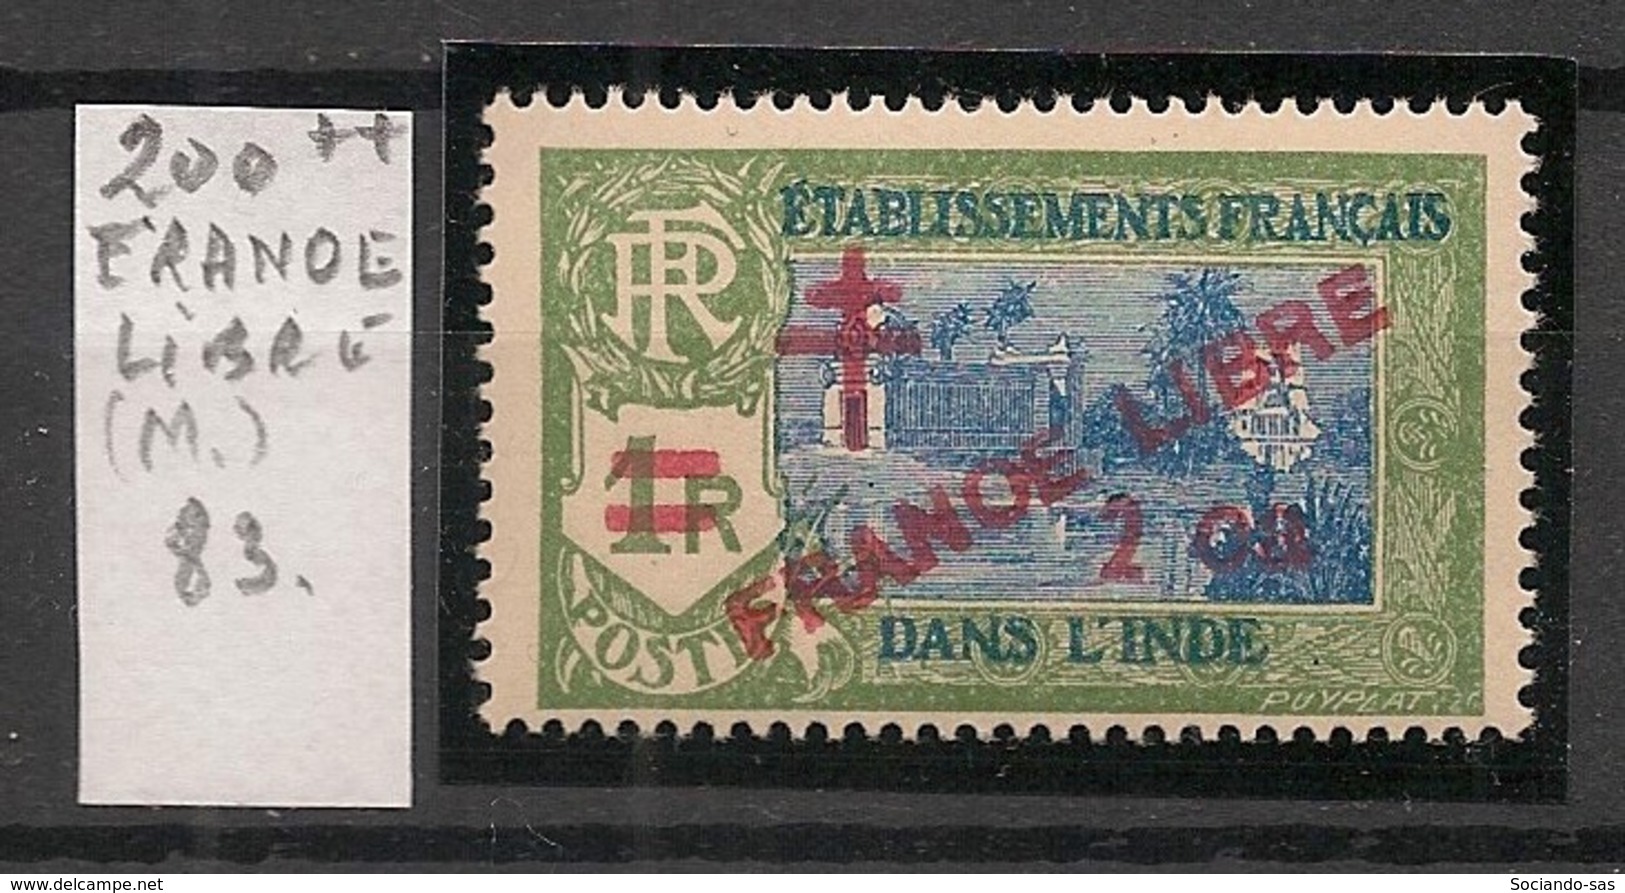 Inde - 1943 - N°Yv. 200 - Variété FRANOE Libre - Neuf Luxe ** / MNH / Postfrisch - Nuovi